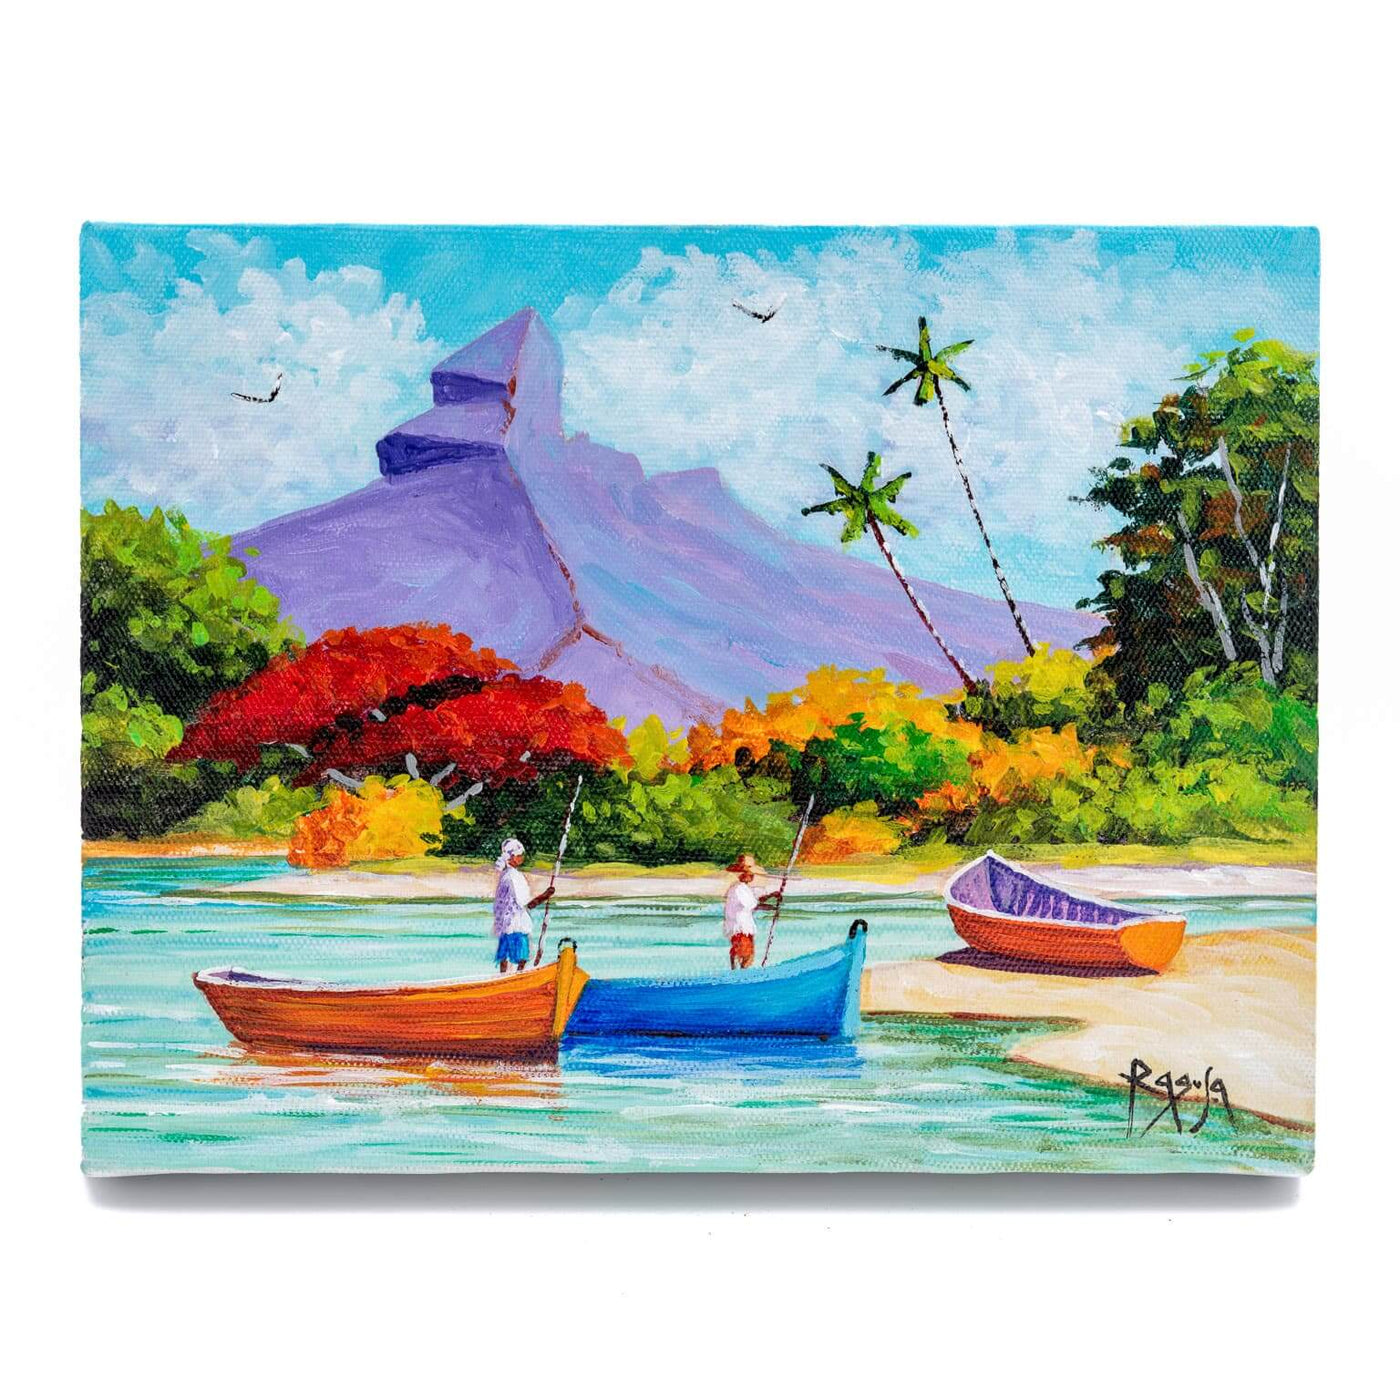 Mauritius-Authentic-HandMade-Painting-Pino Ragusa, "Retour de pêche à Tamarin"-DodoMarket